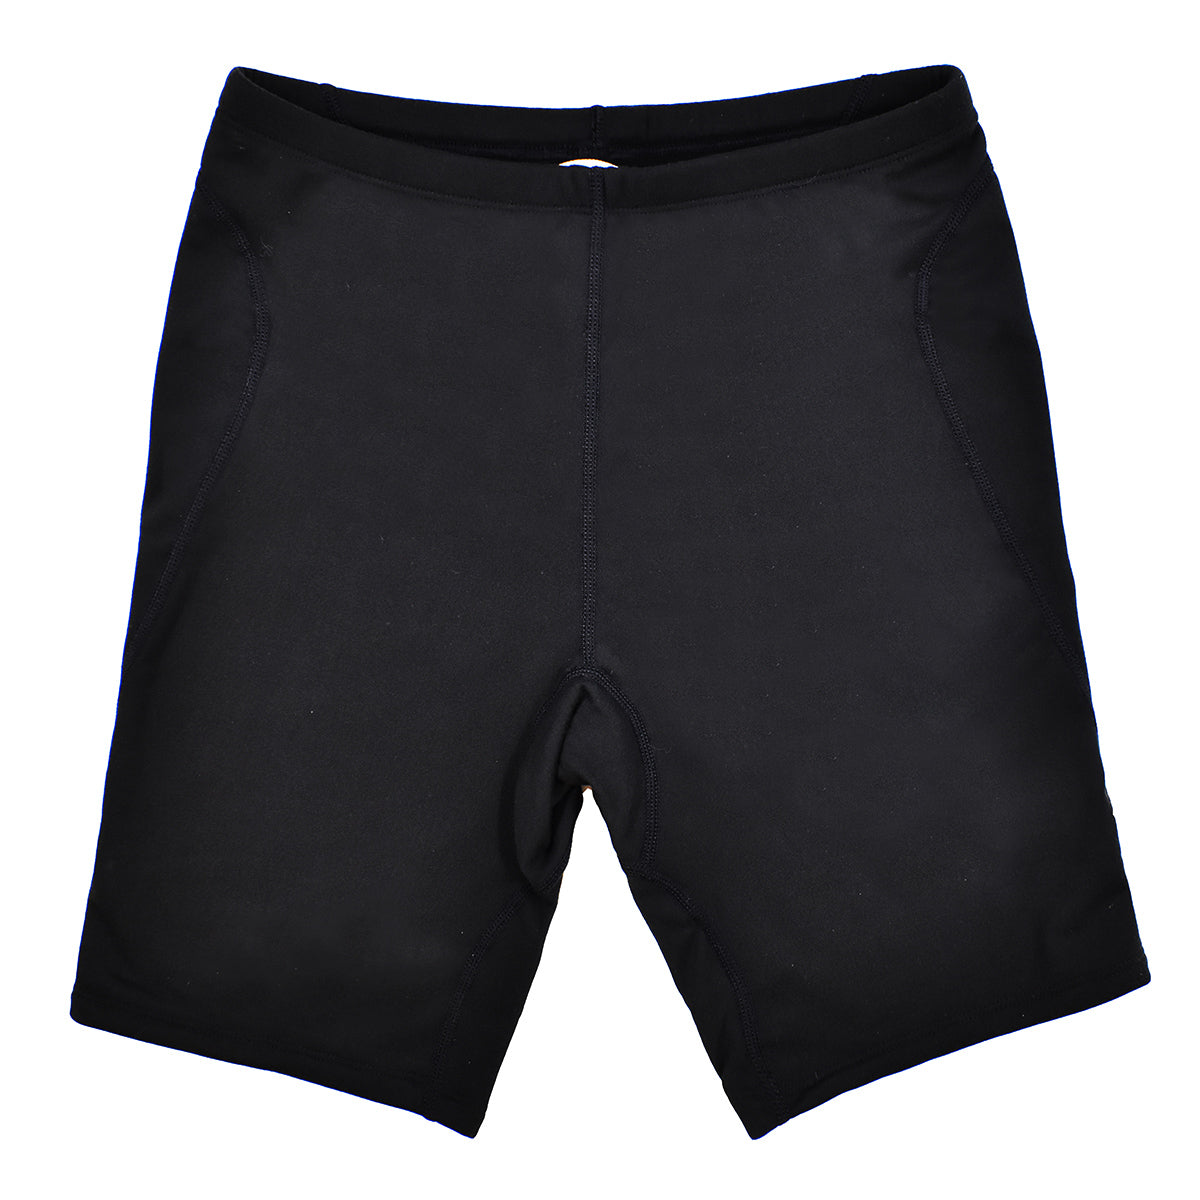 Thermaswim Adult Swim Shorts Thermal Shorts, Adult Swimwear